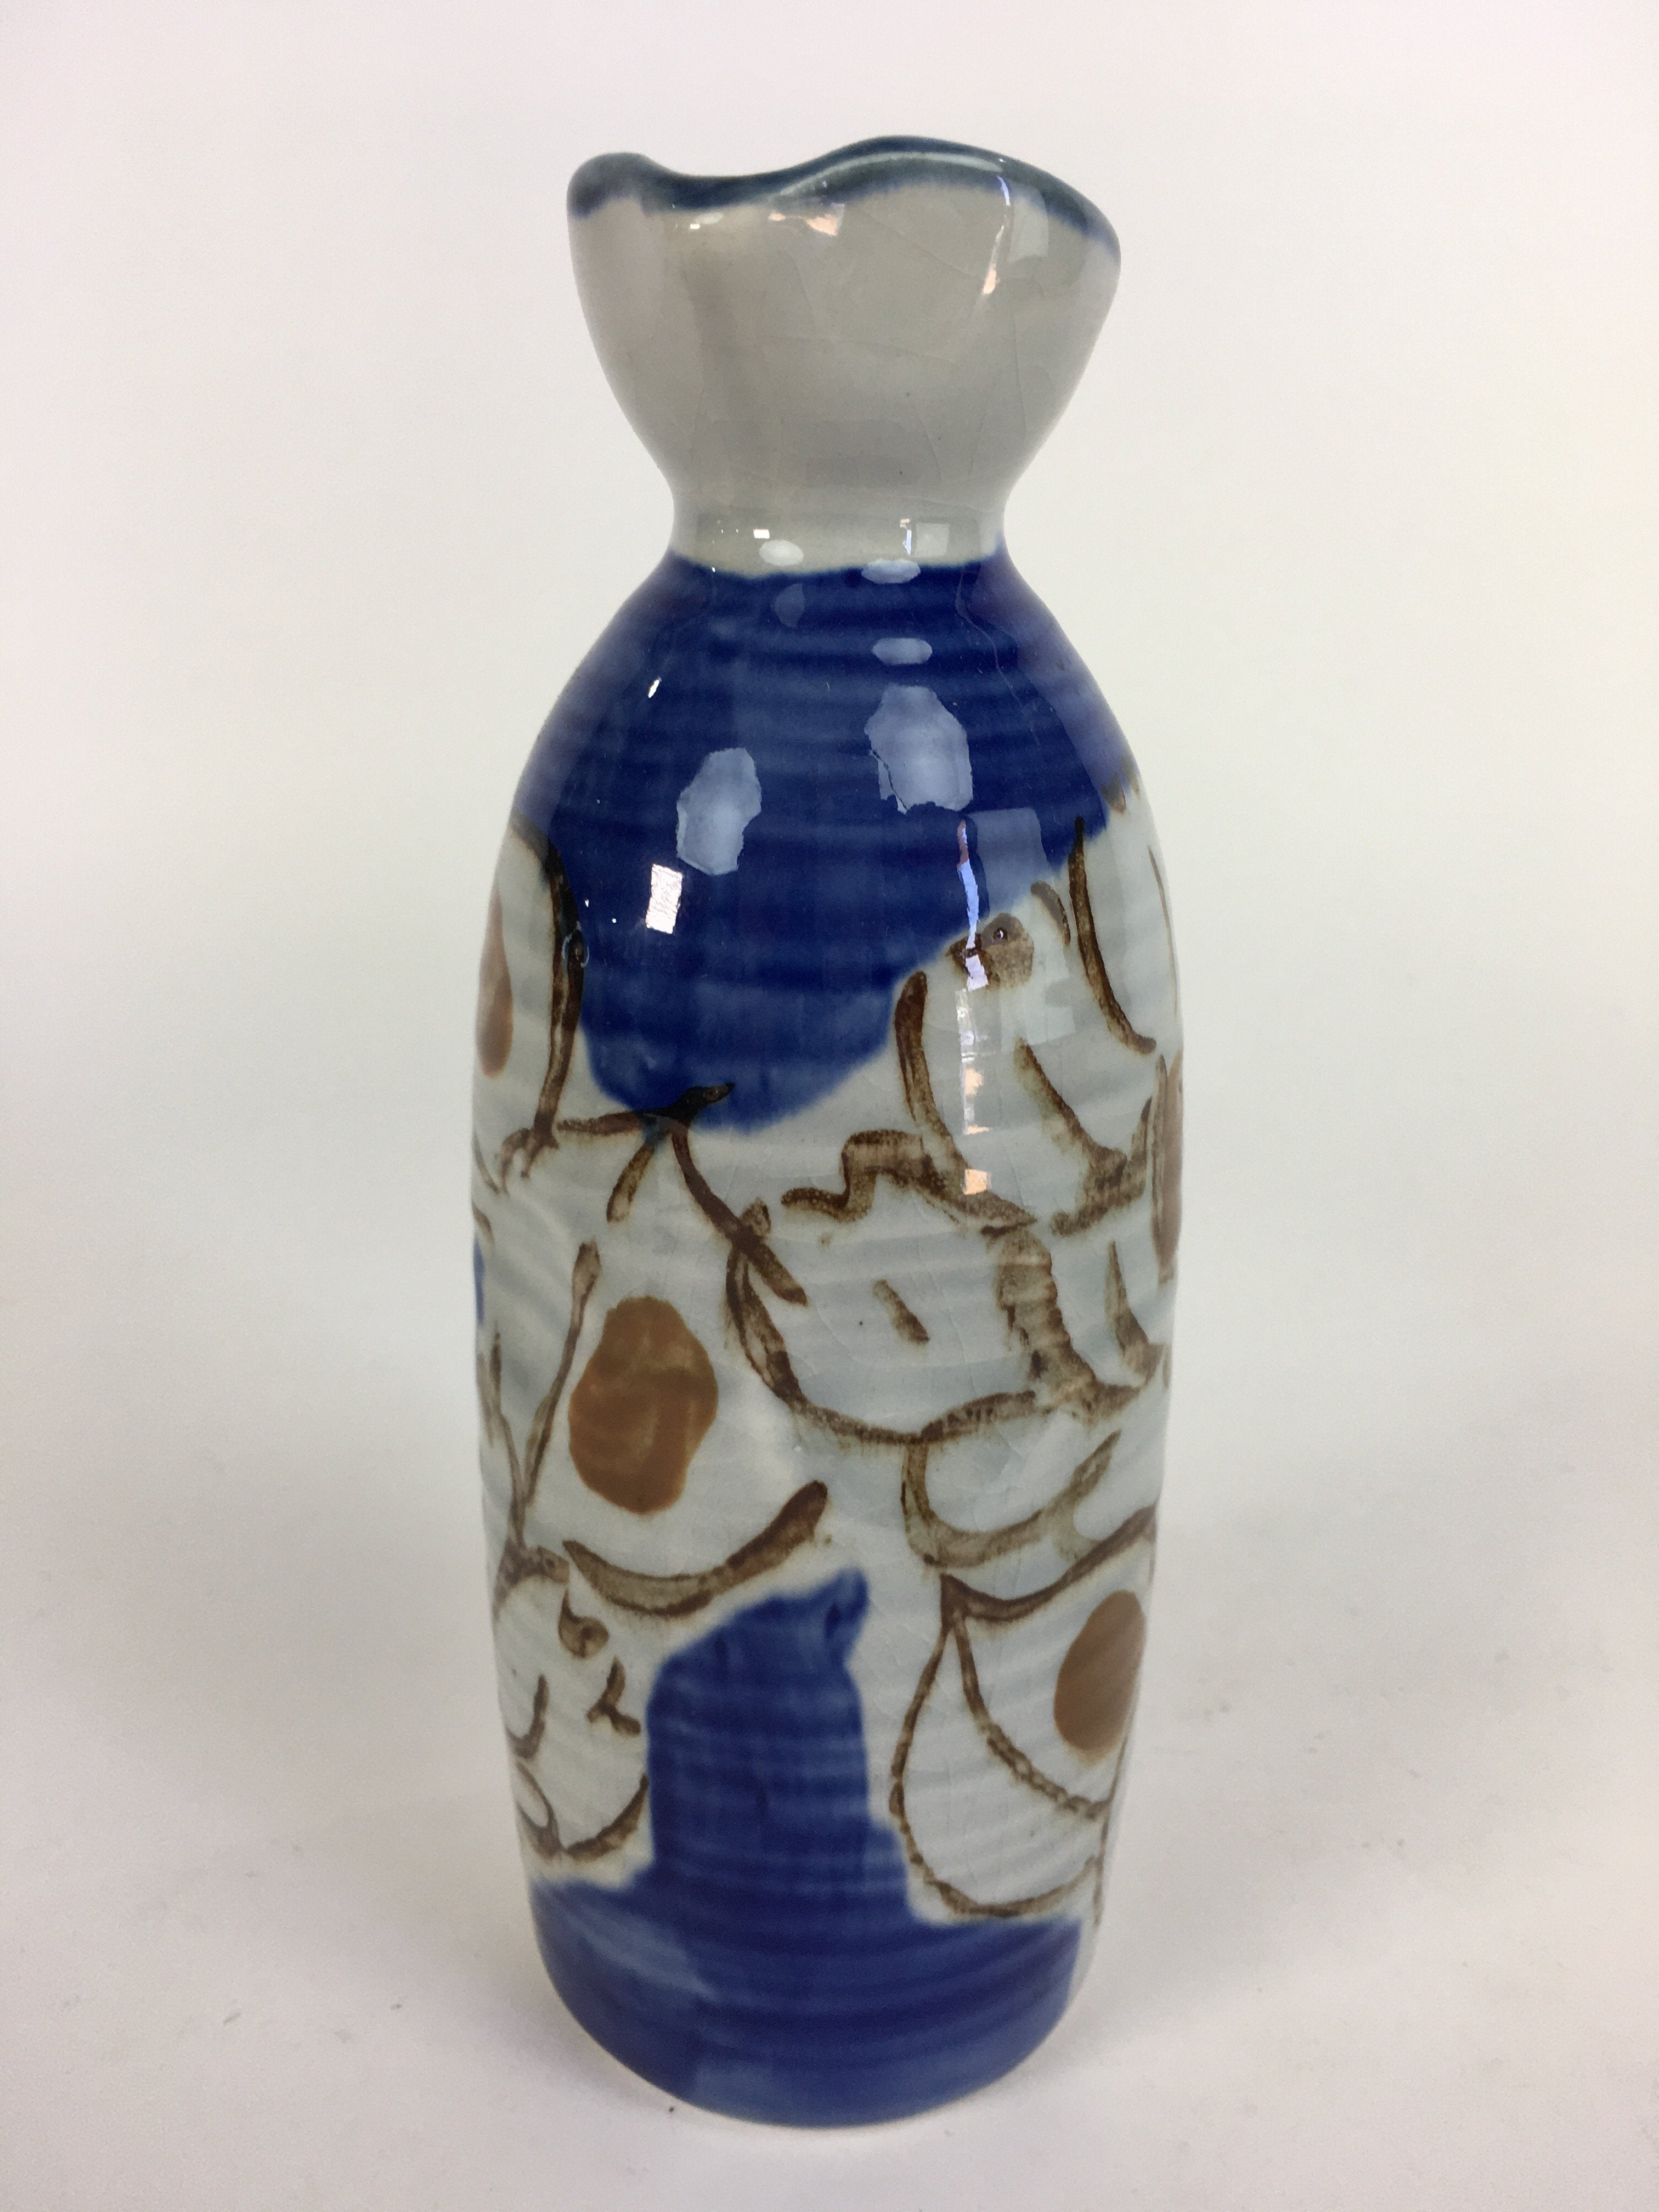 Japanese Ceramic Sake Bottle Tokkuri Vtg Pottery Blue Hand Drawn Picture TS266